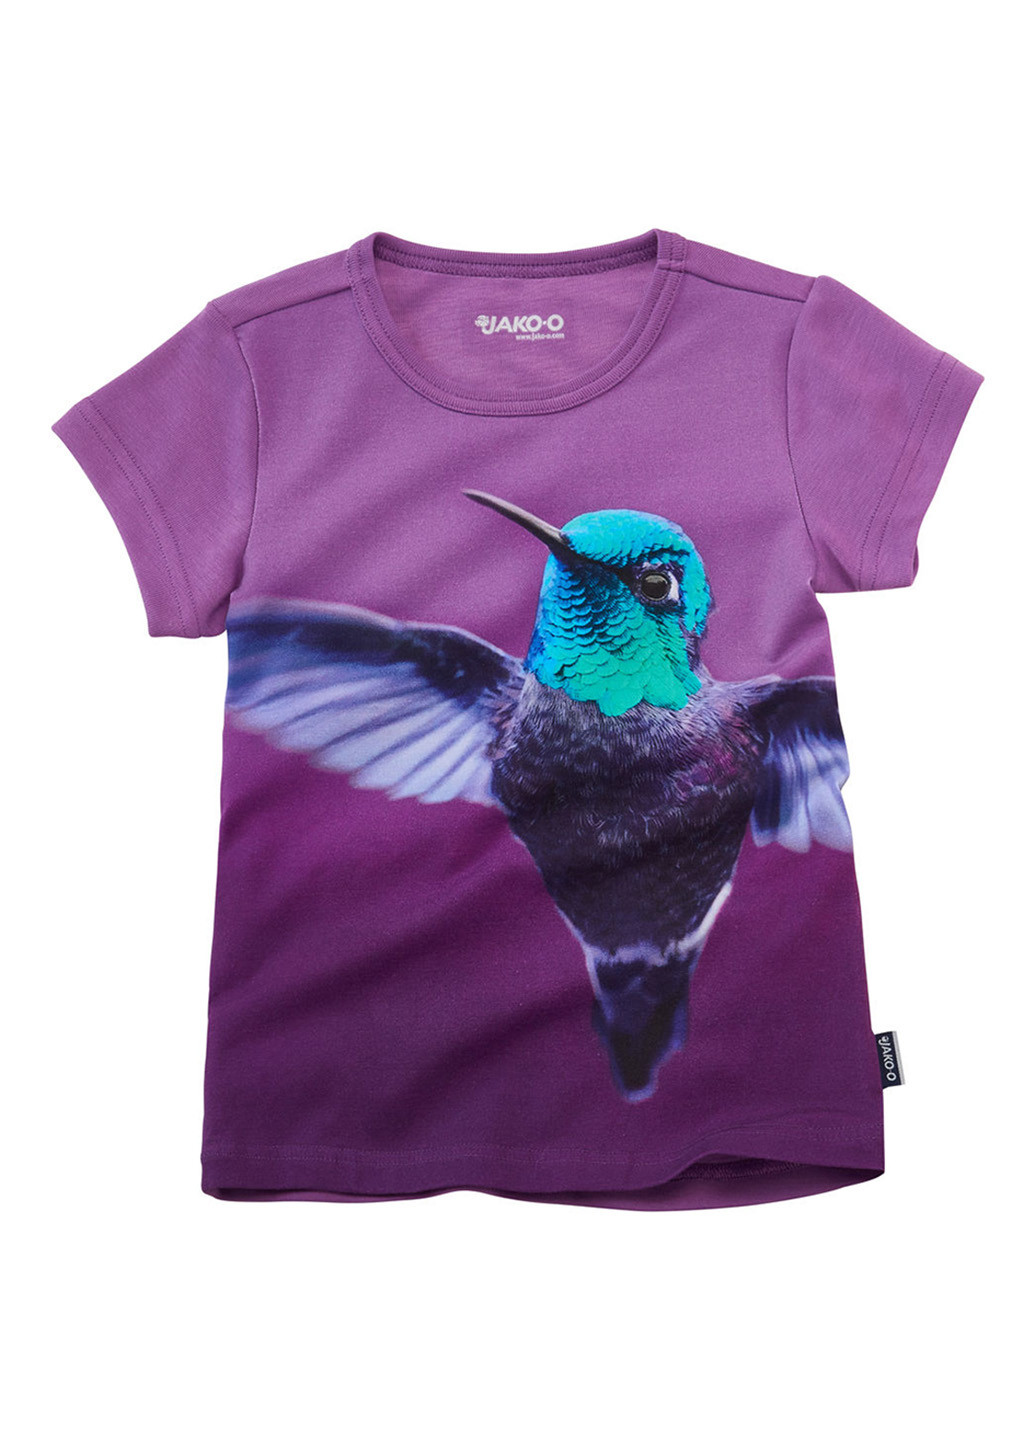 Фиолетовая летняя футболка Jako-O